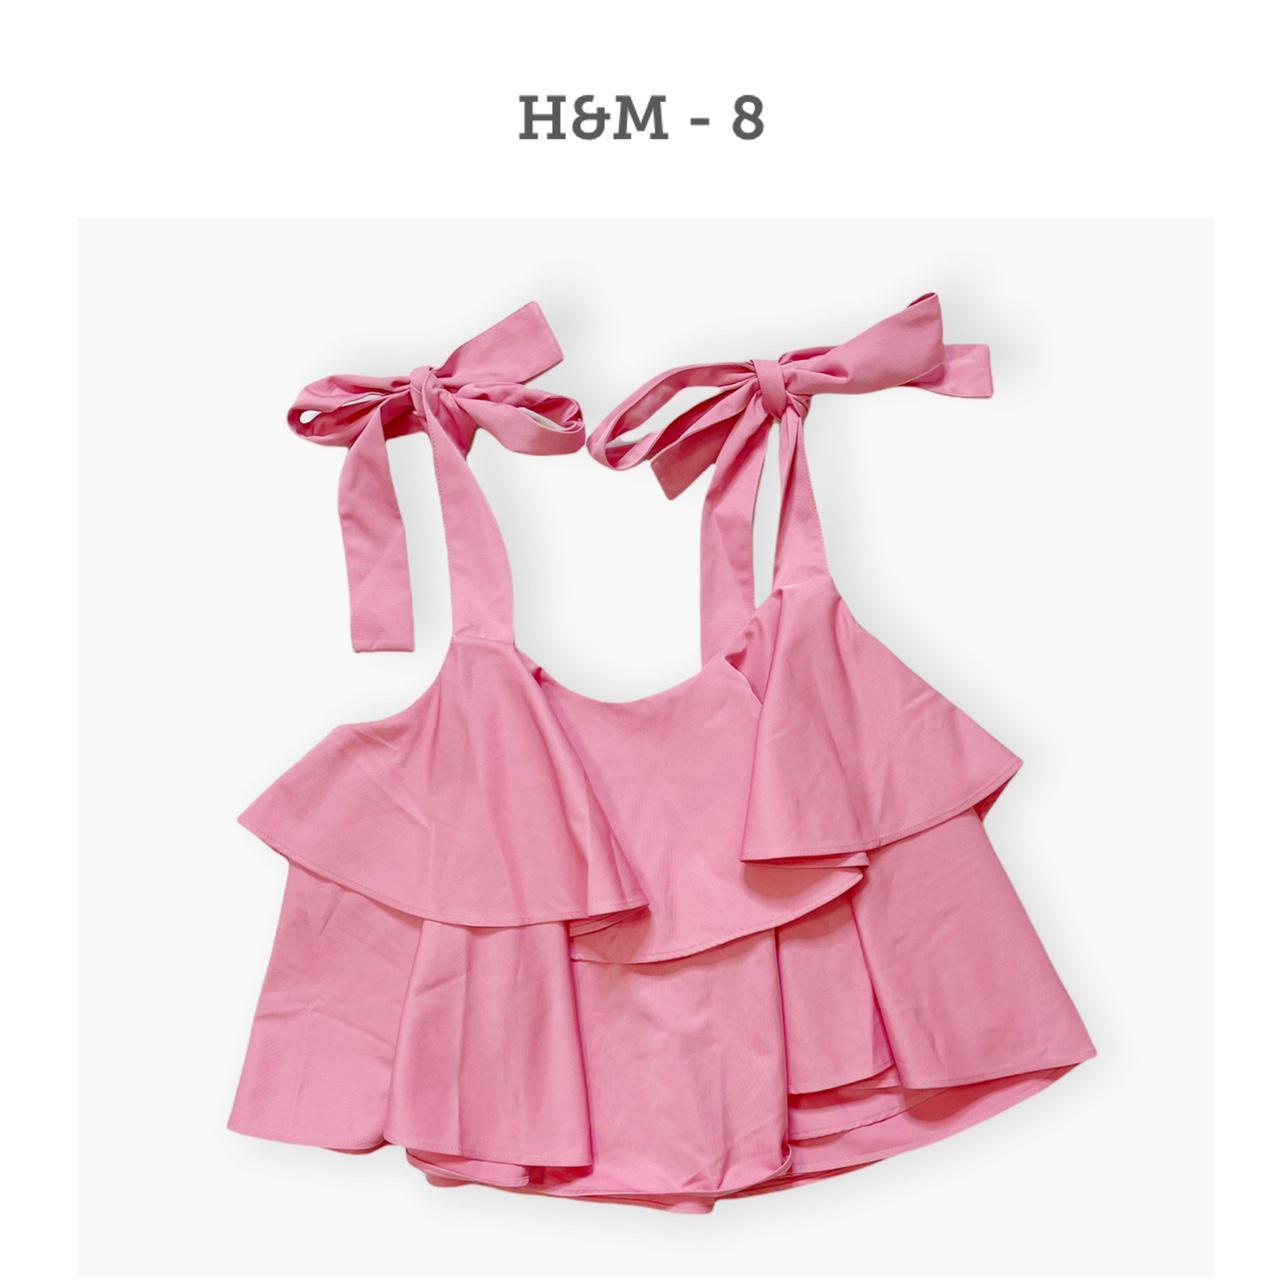 H&M Women's Pink Blouse